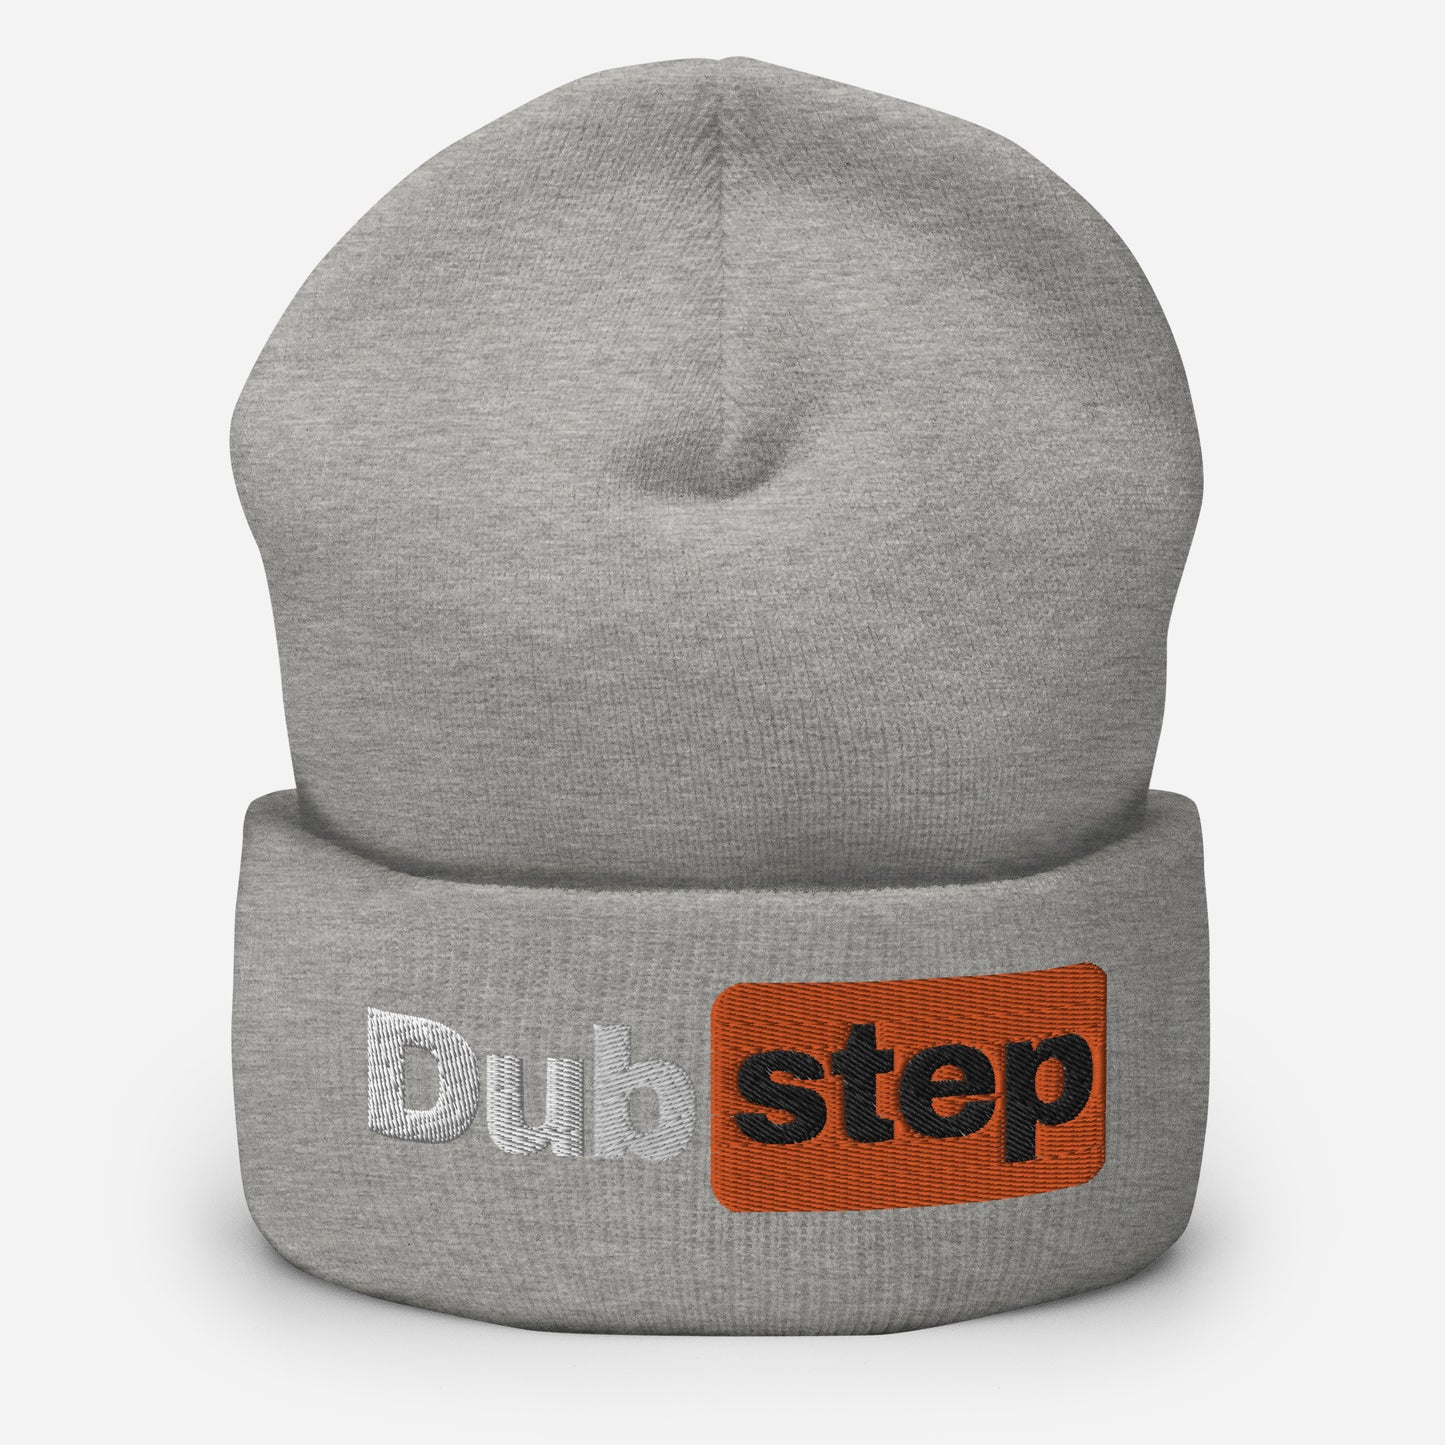 Dubstep Phub Logo Unisex Embroidered Bucket Hat